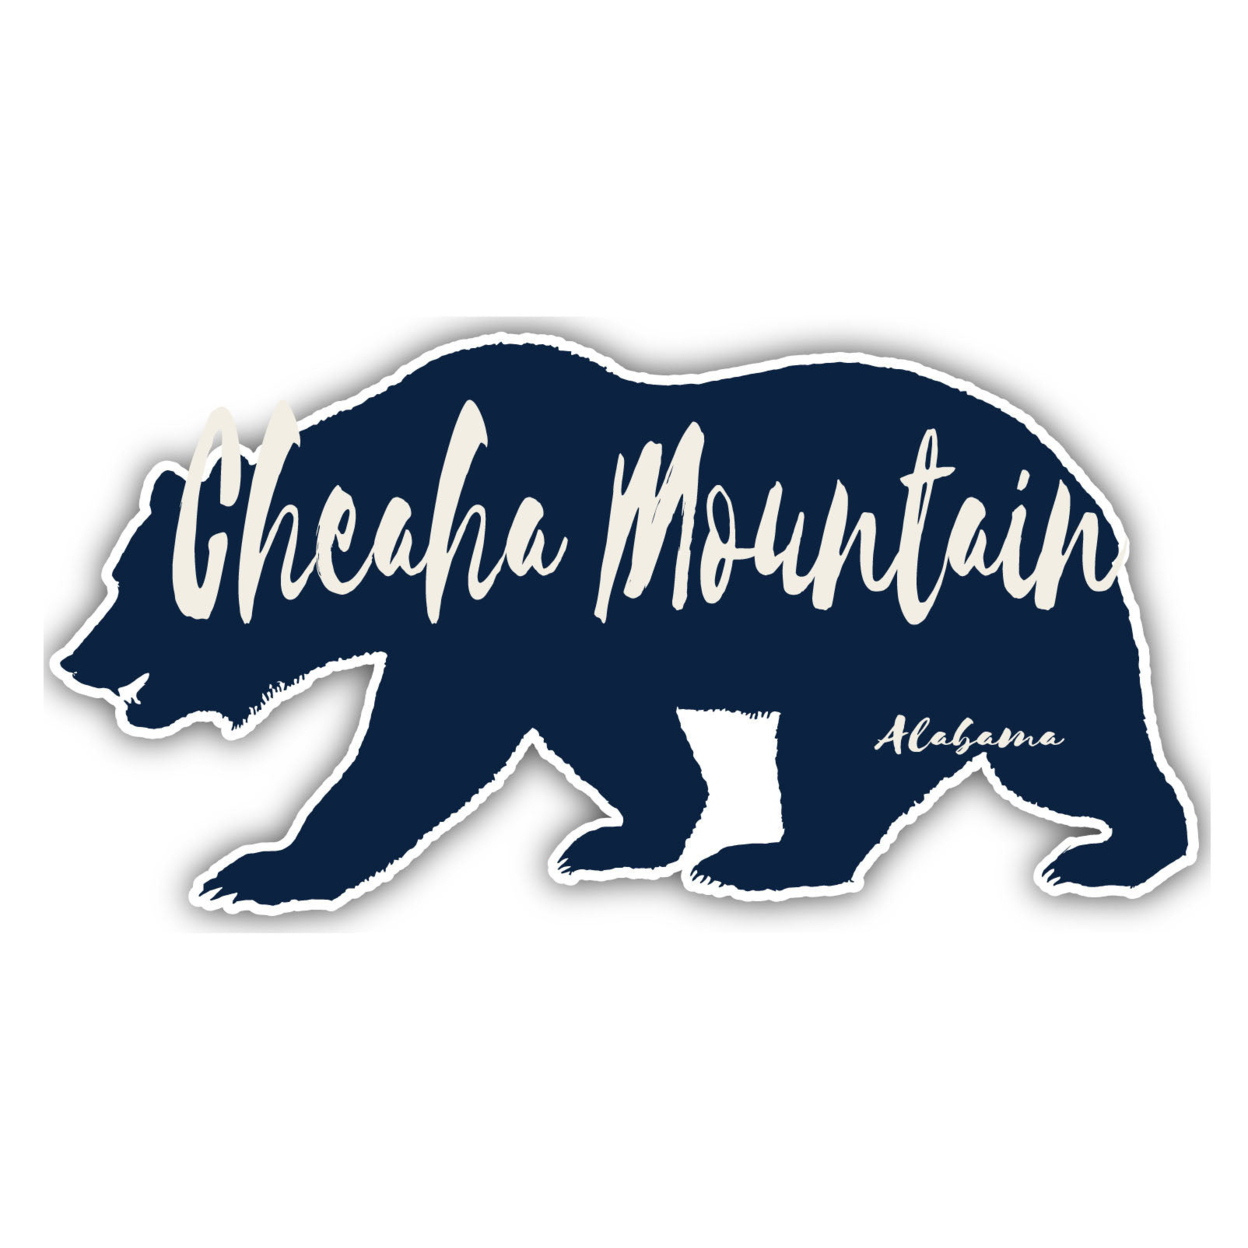 Cheaha Mountain Alabama Souvenir Decorative Stickers (Choose Theme And Size) - Single Unit, 6-Inch, Bear